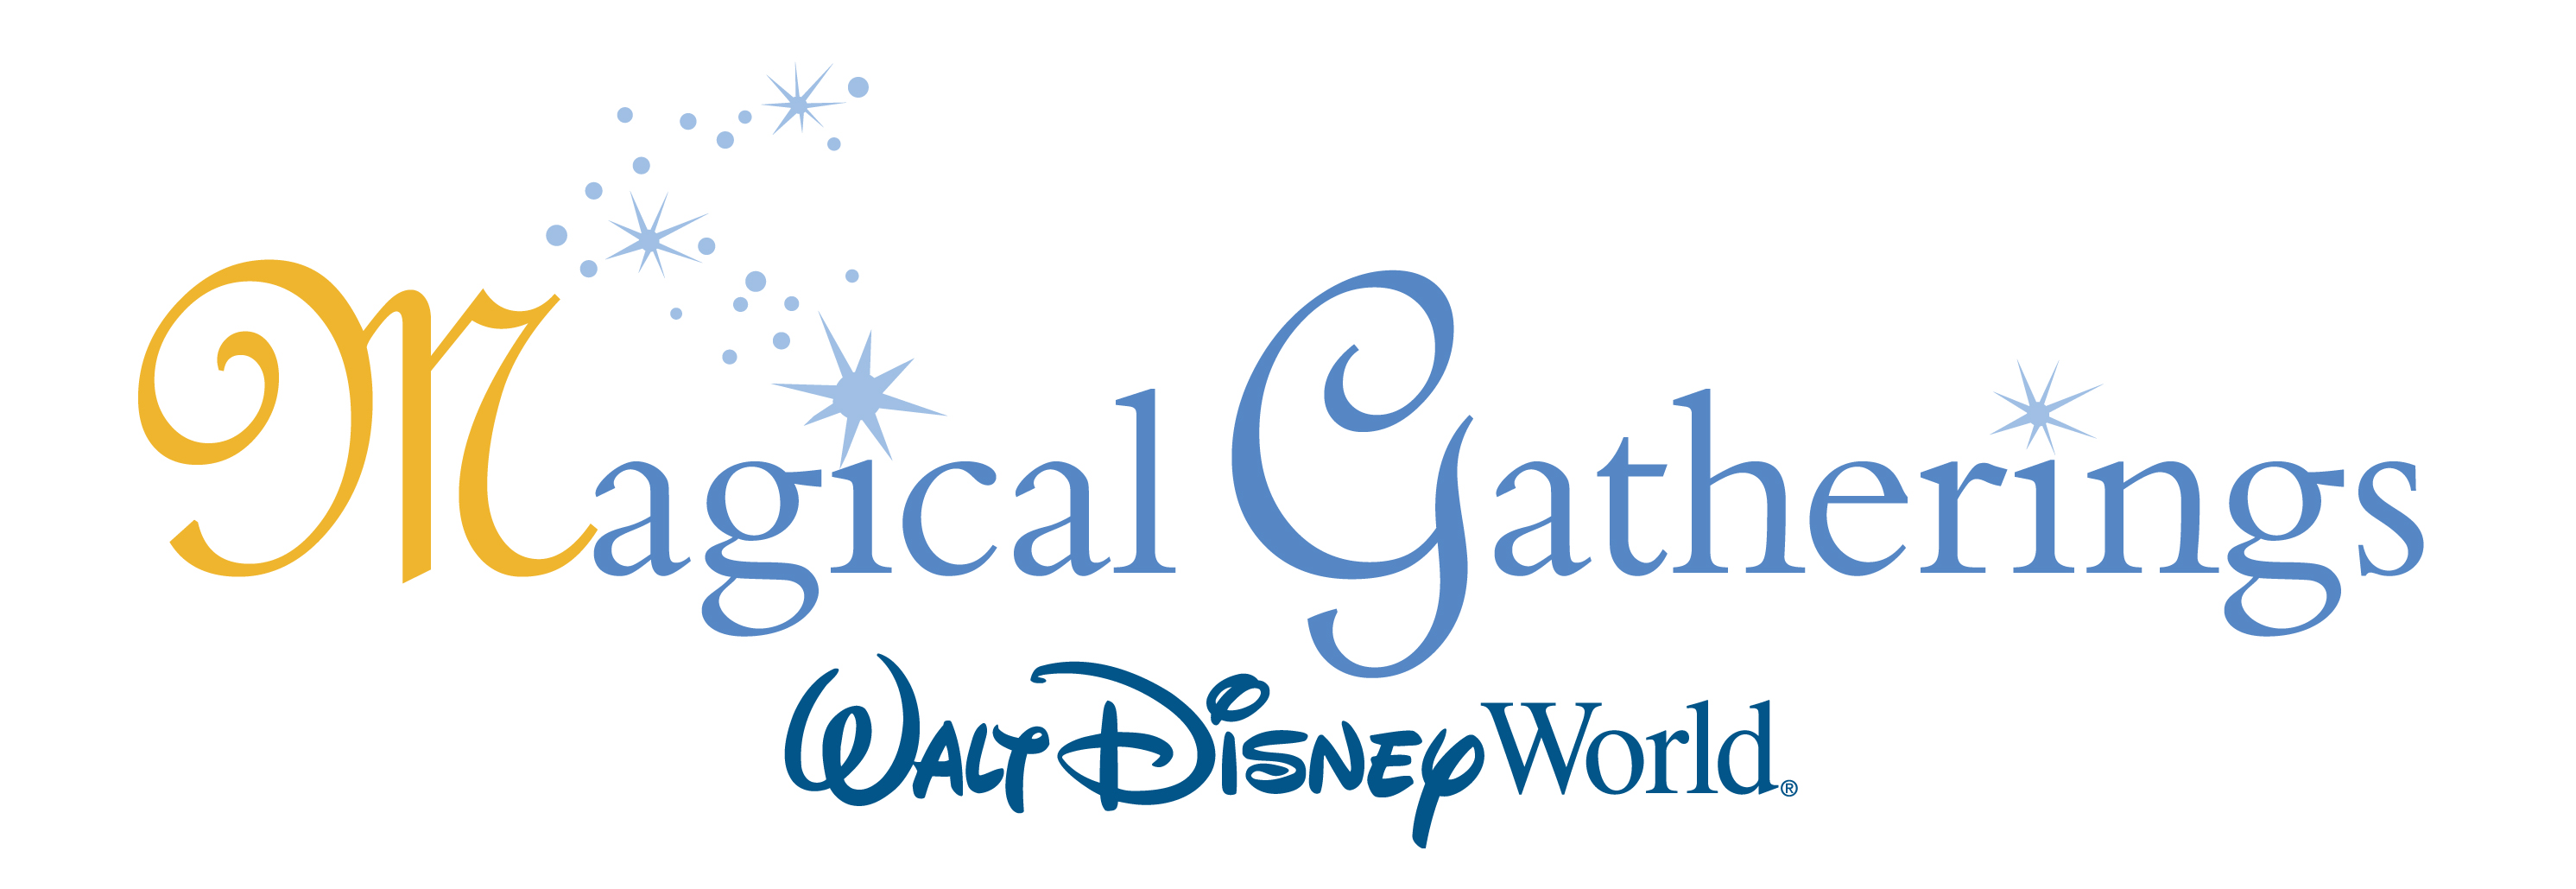 Magical Gatherings Logo 1896 Jpg   0kb